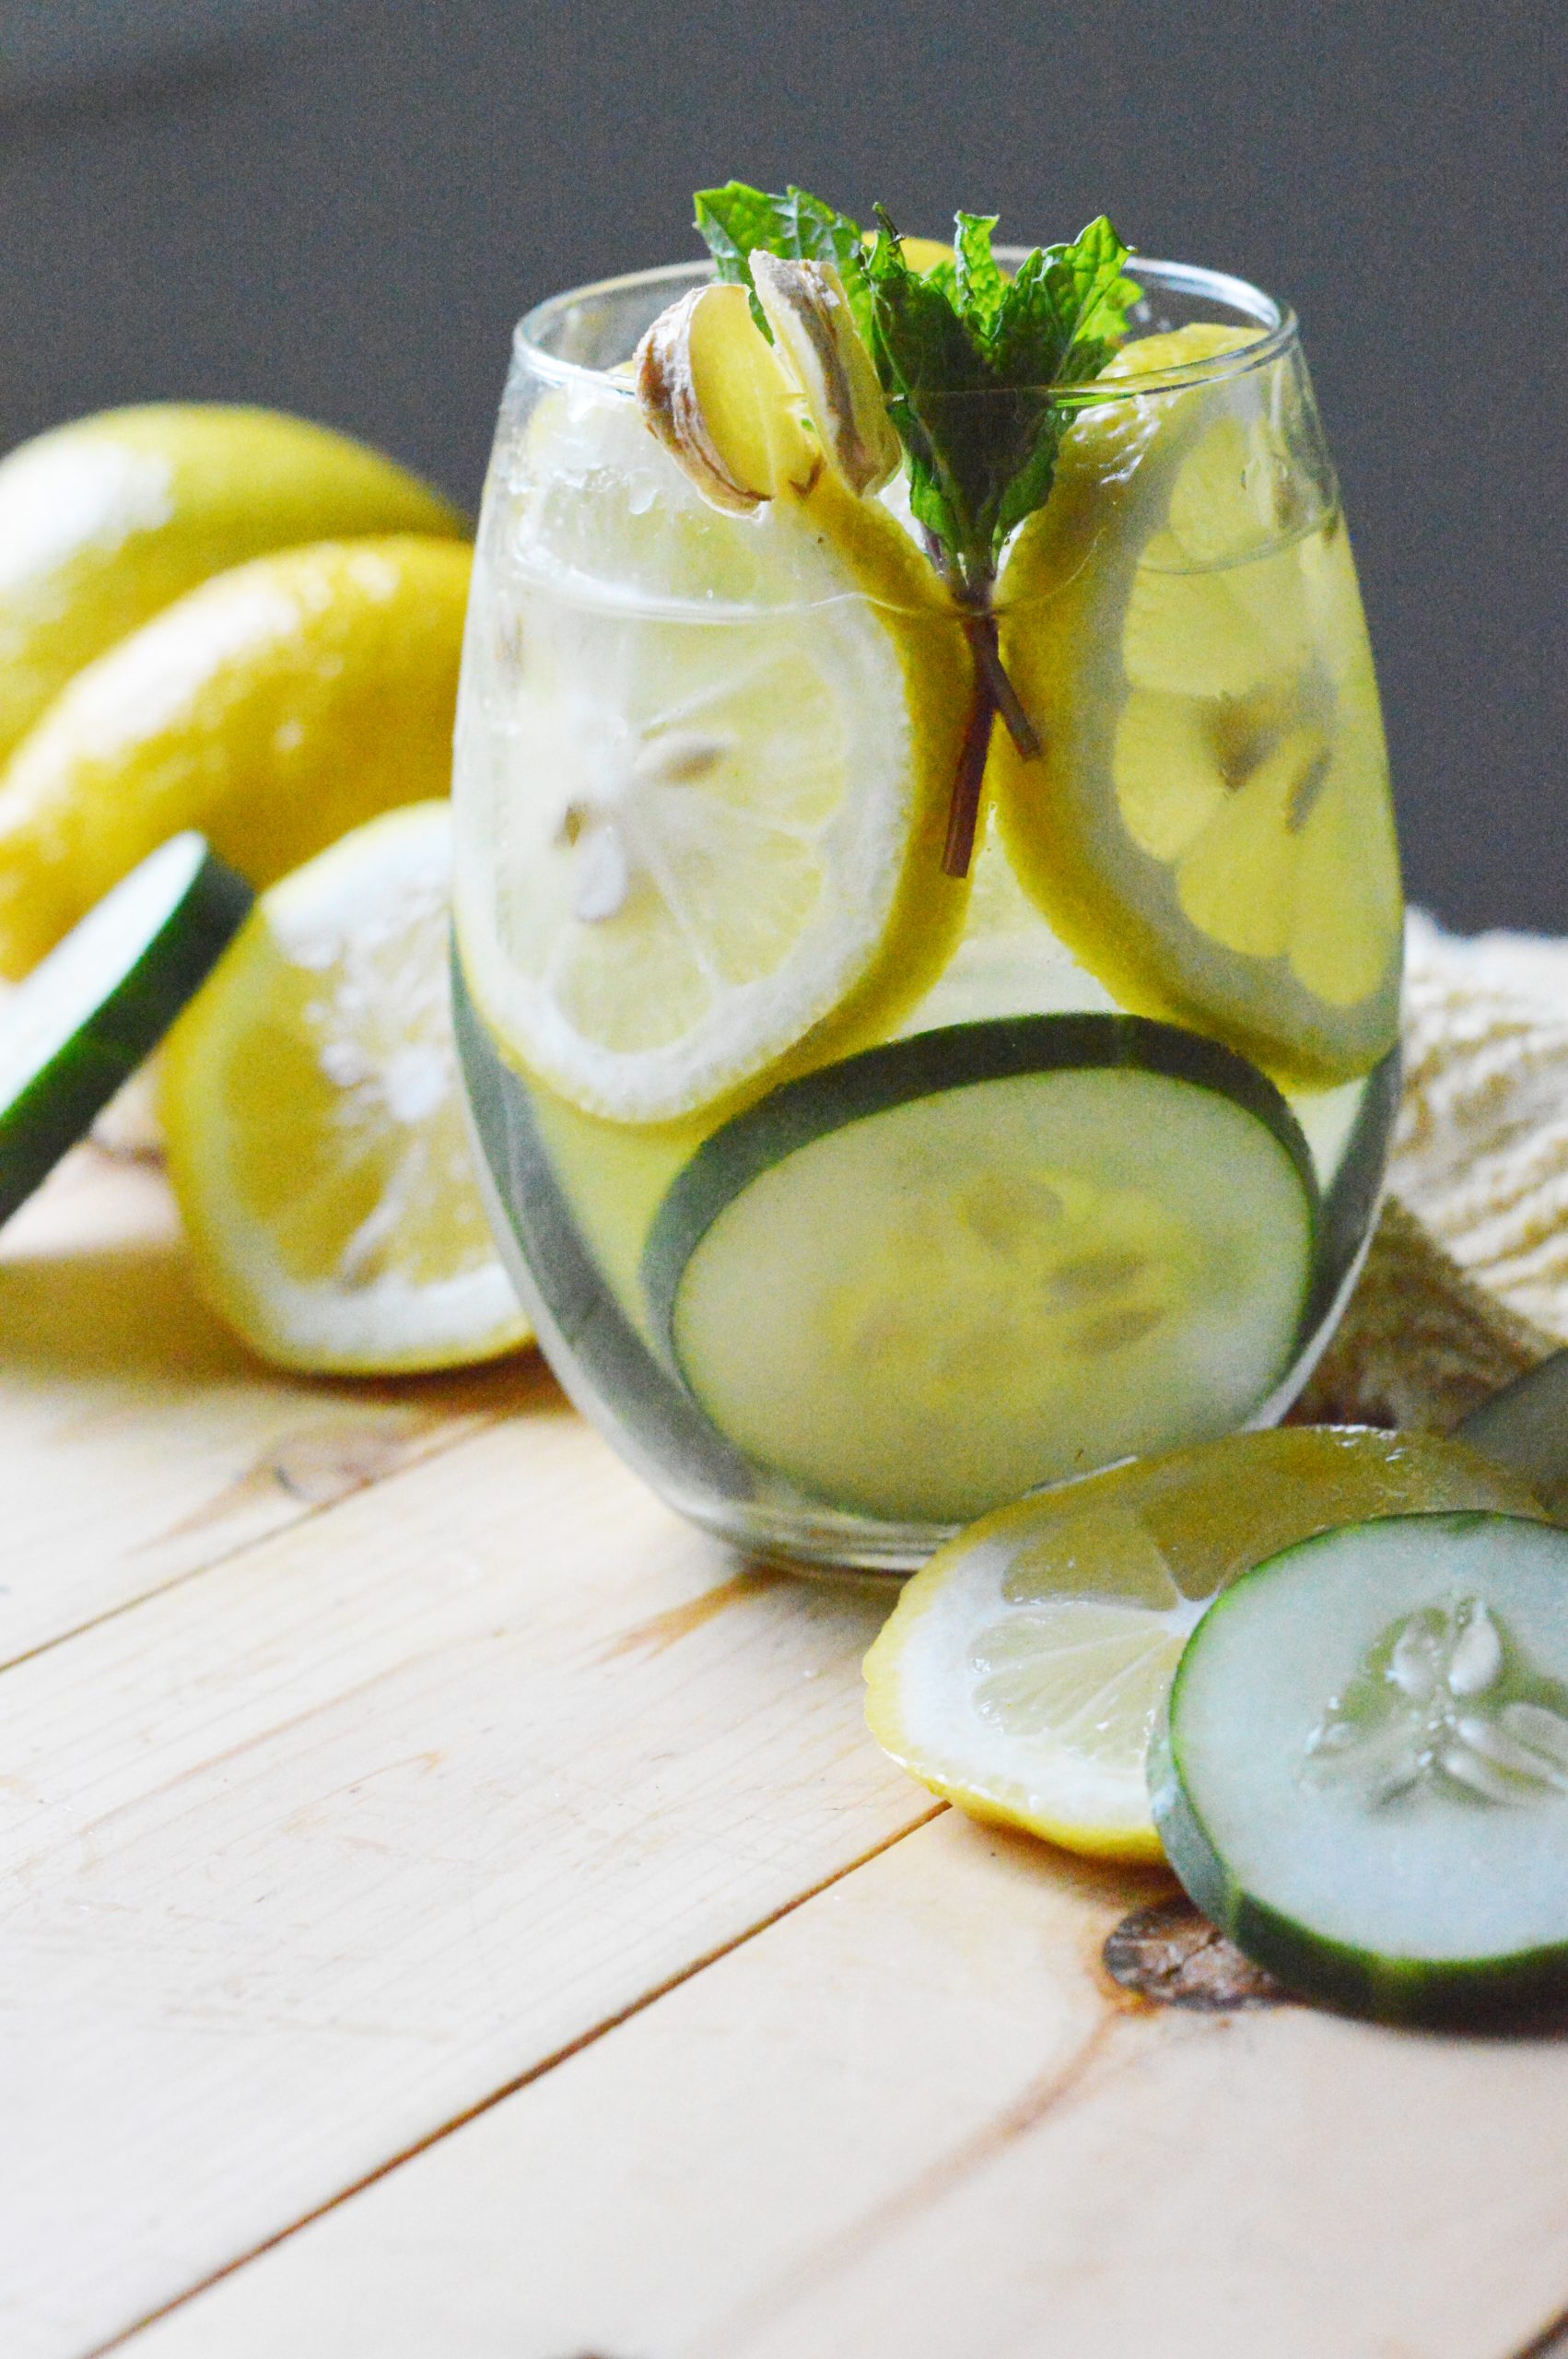 cucumber lemon detox water in glass on wood table